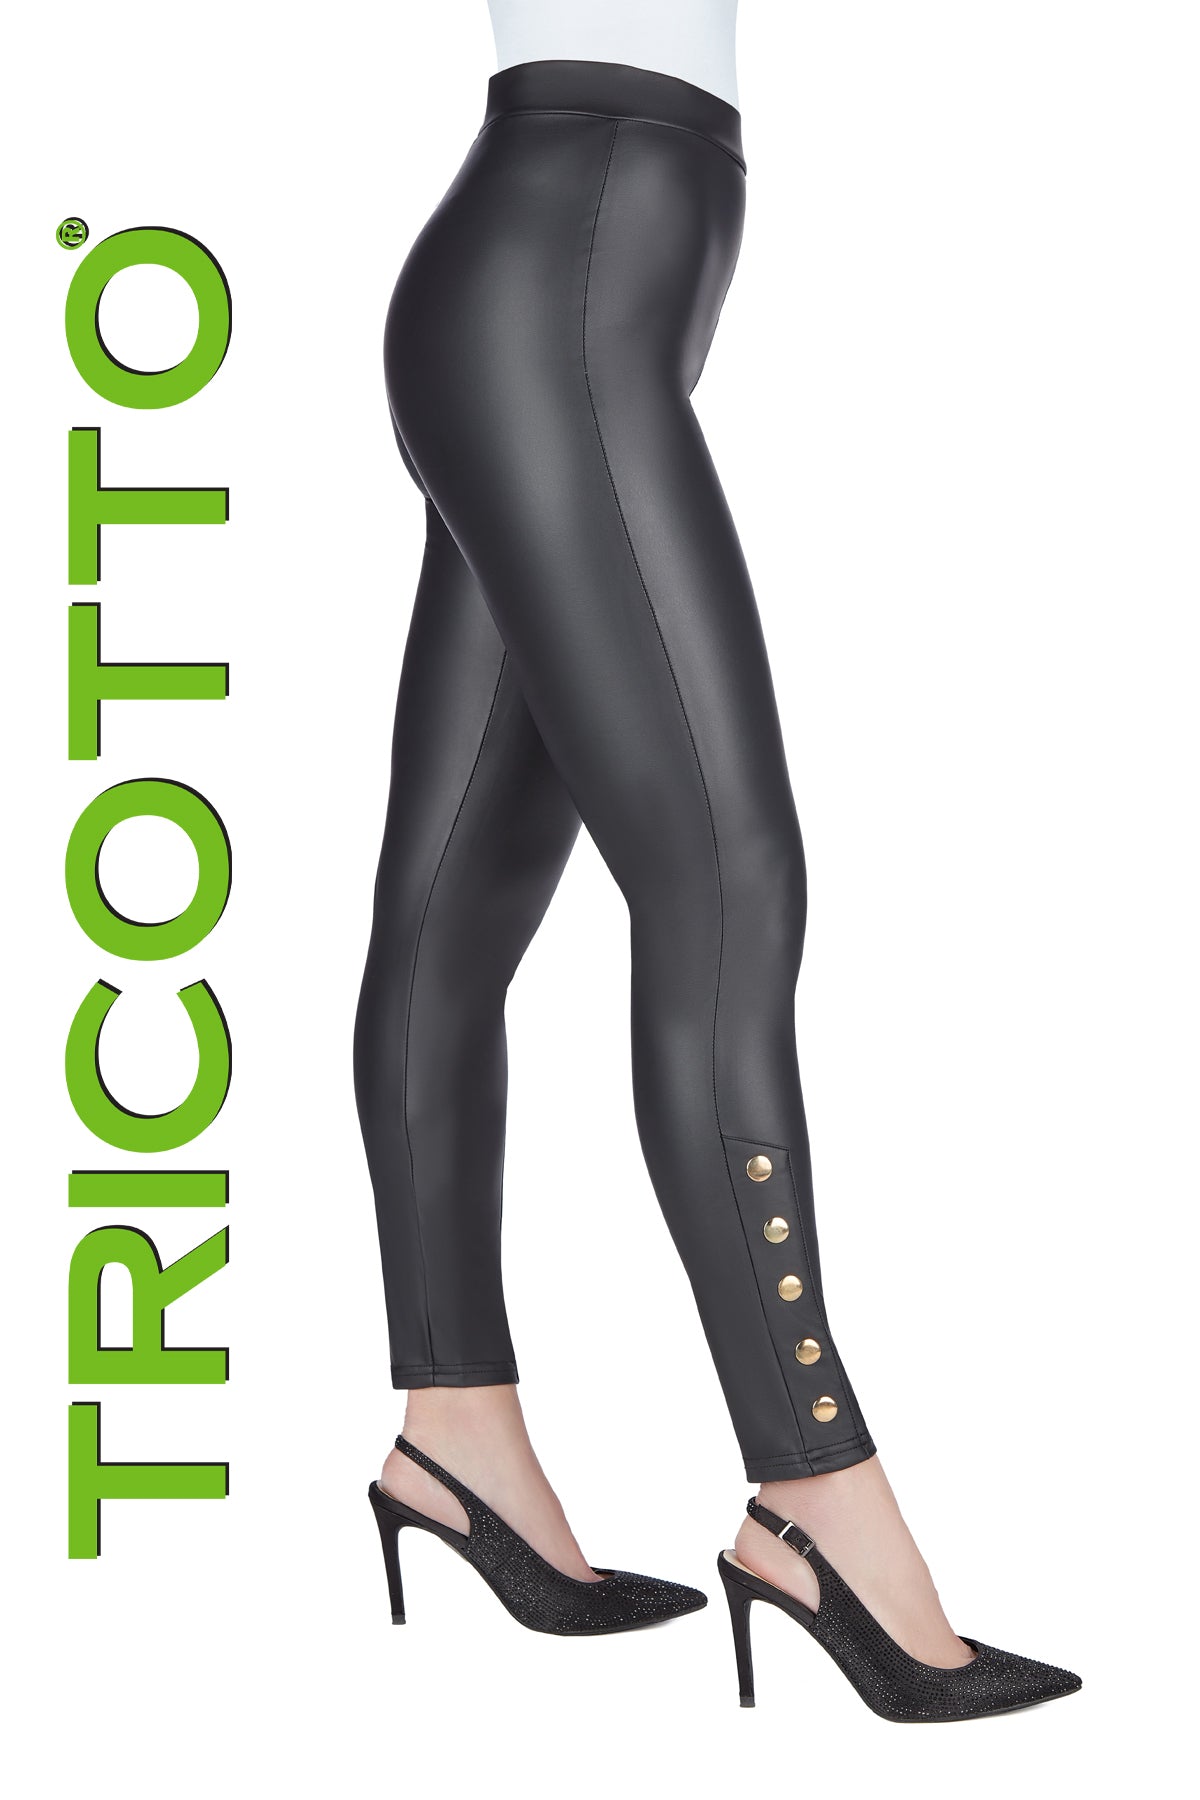 Tricotto Black leggings-Buy Tricotto Leggings Online-Tricotto Fashion Montreal